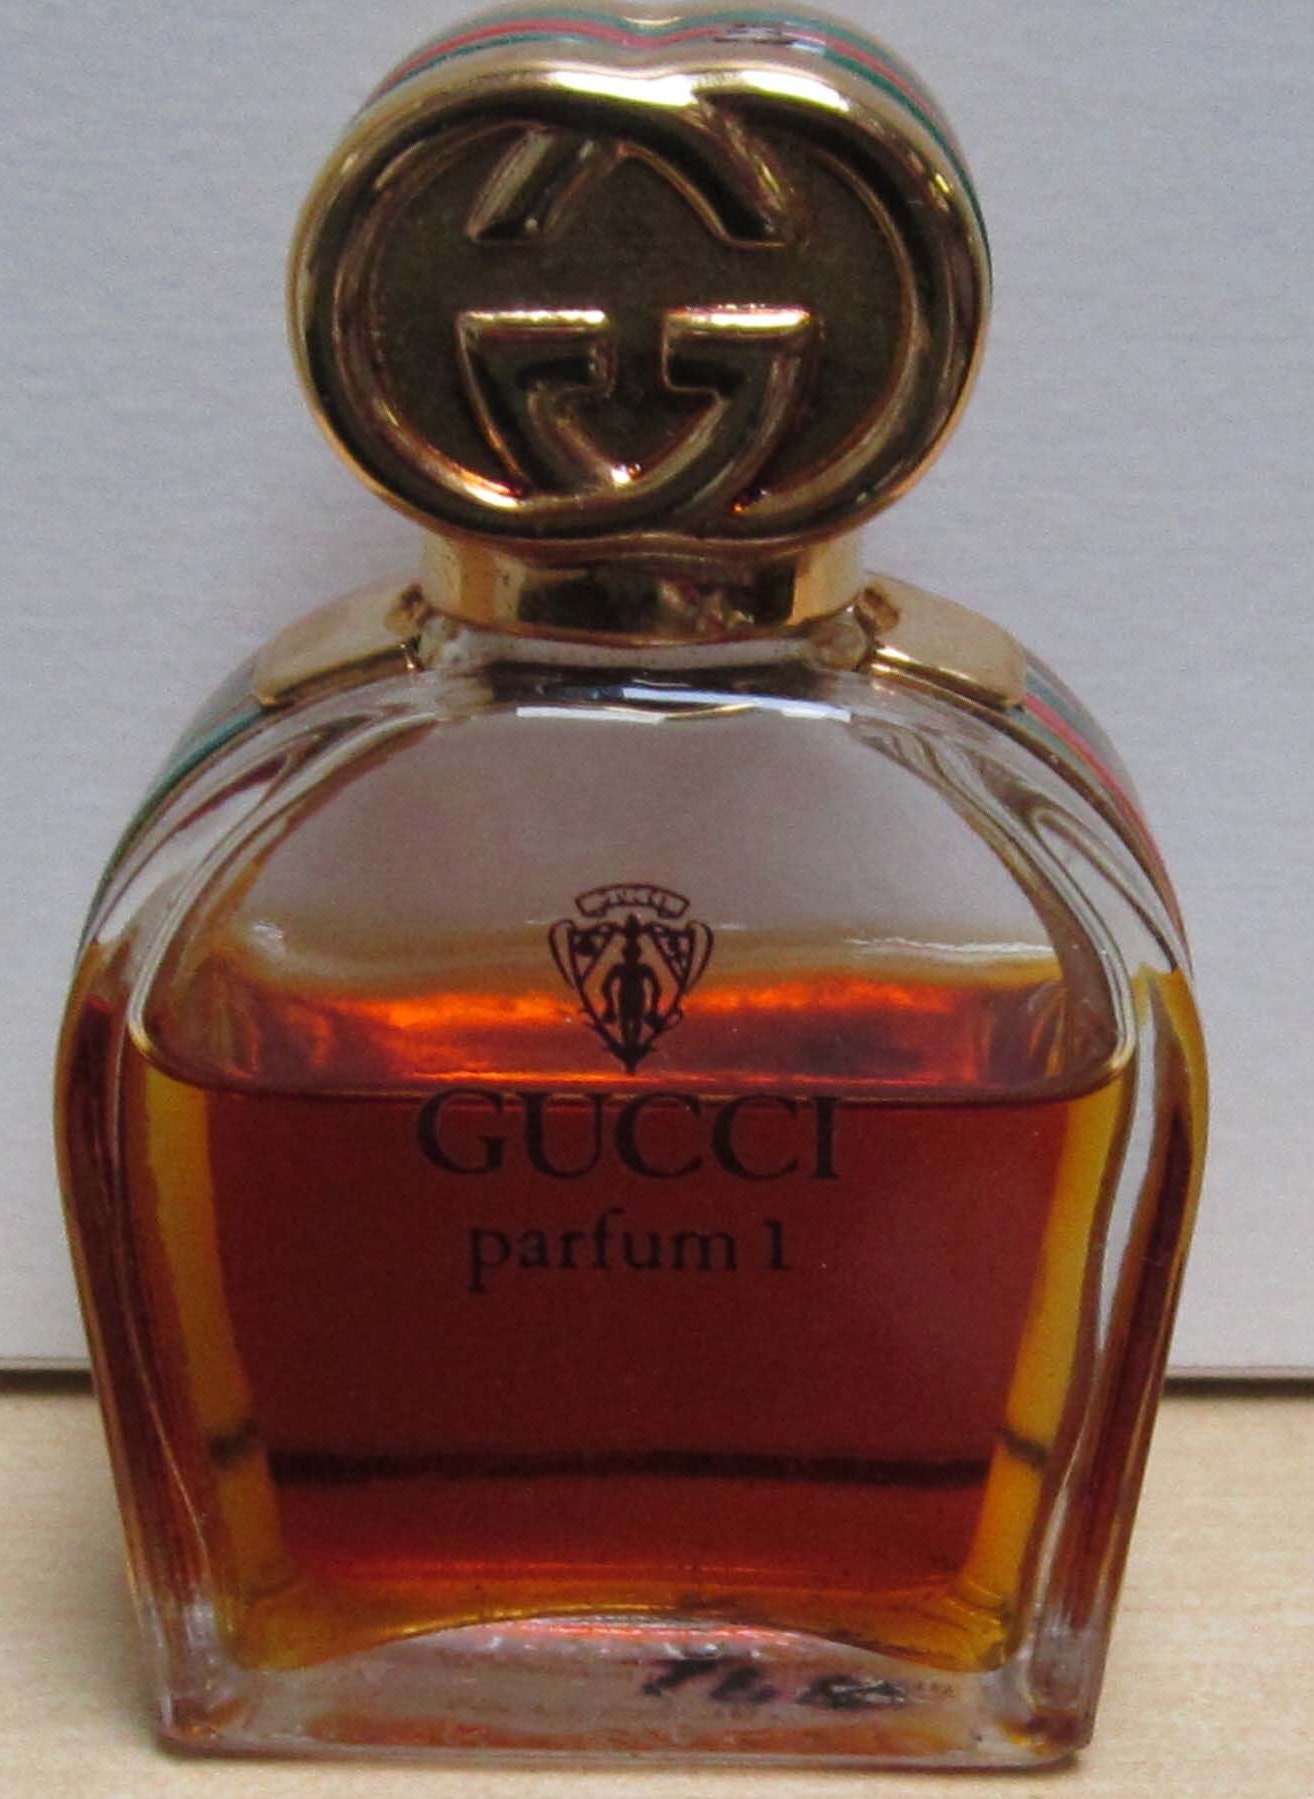 Parfum 2 Gucci - Etsy